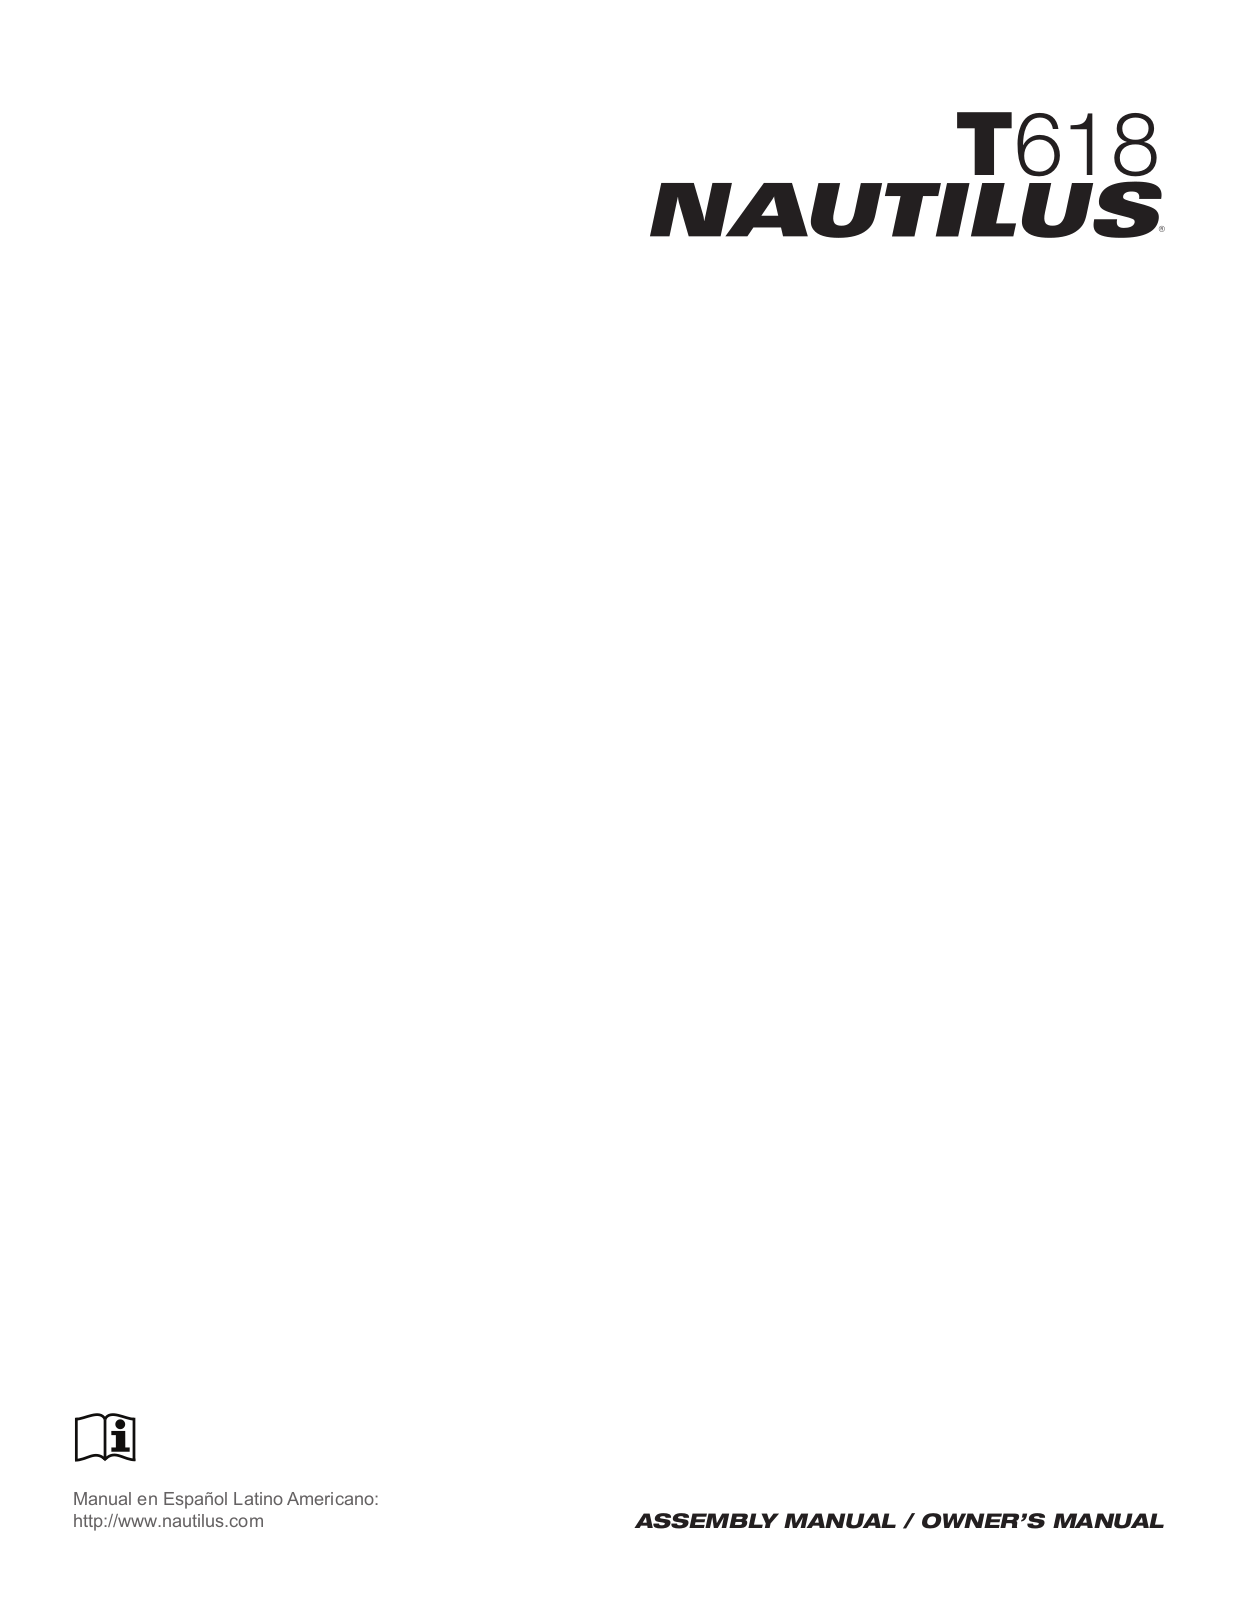 Nautilus T618 User Manual